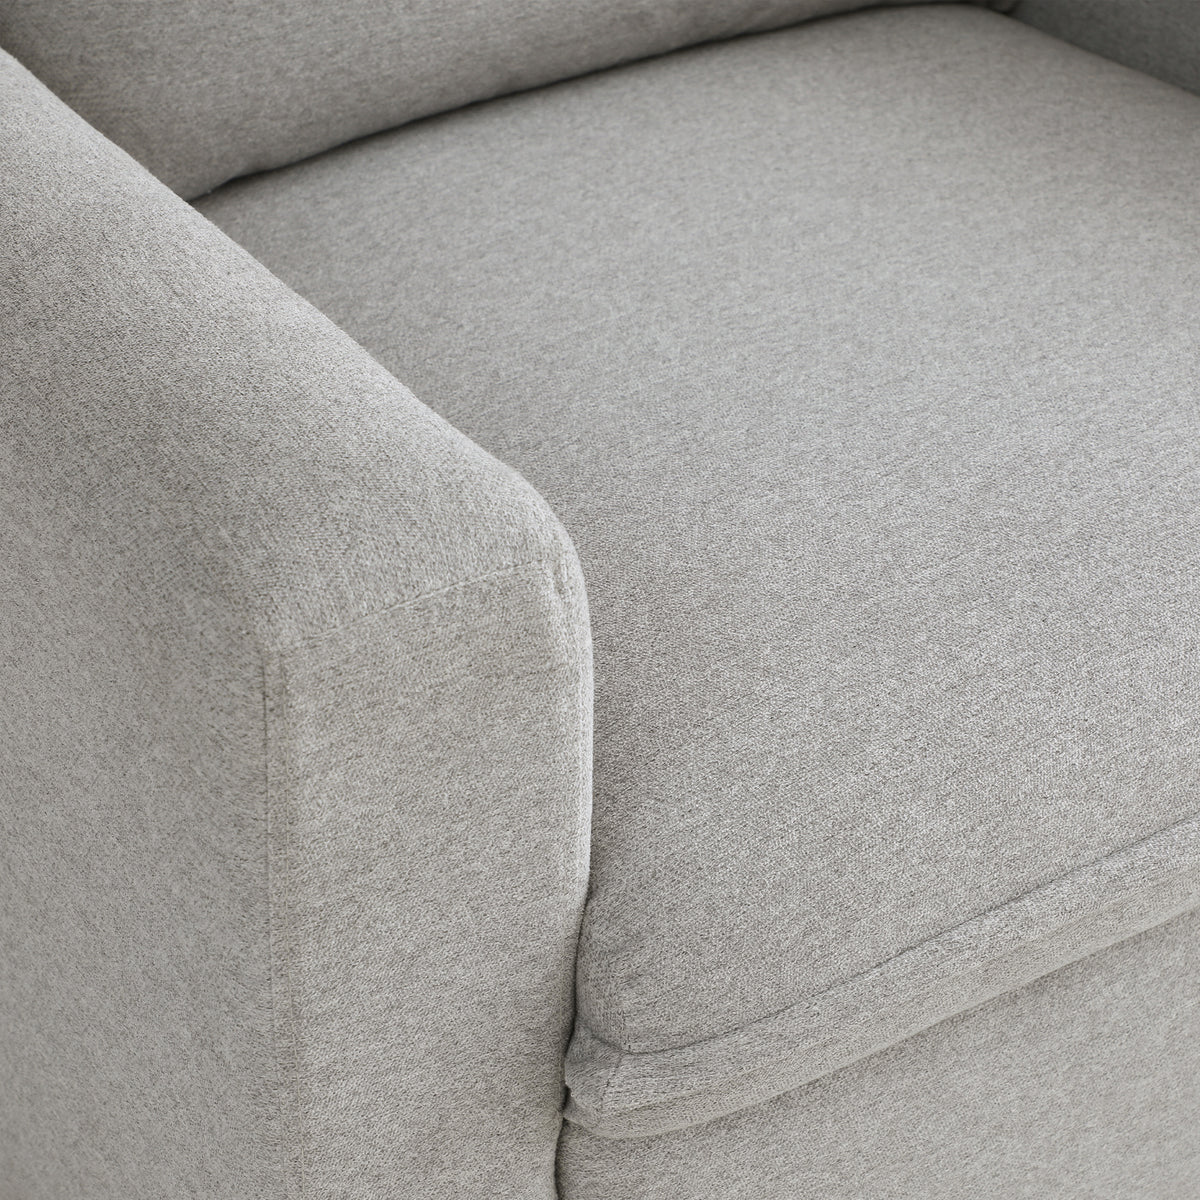 Kingham Faux Wool Swivel Manual Reclining Armchair from Roseland Furniture